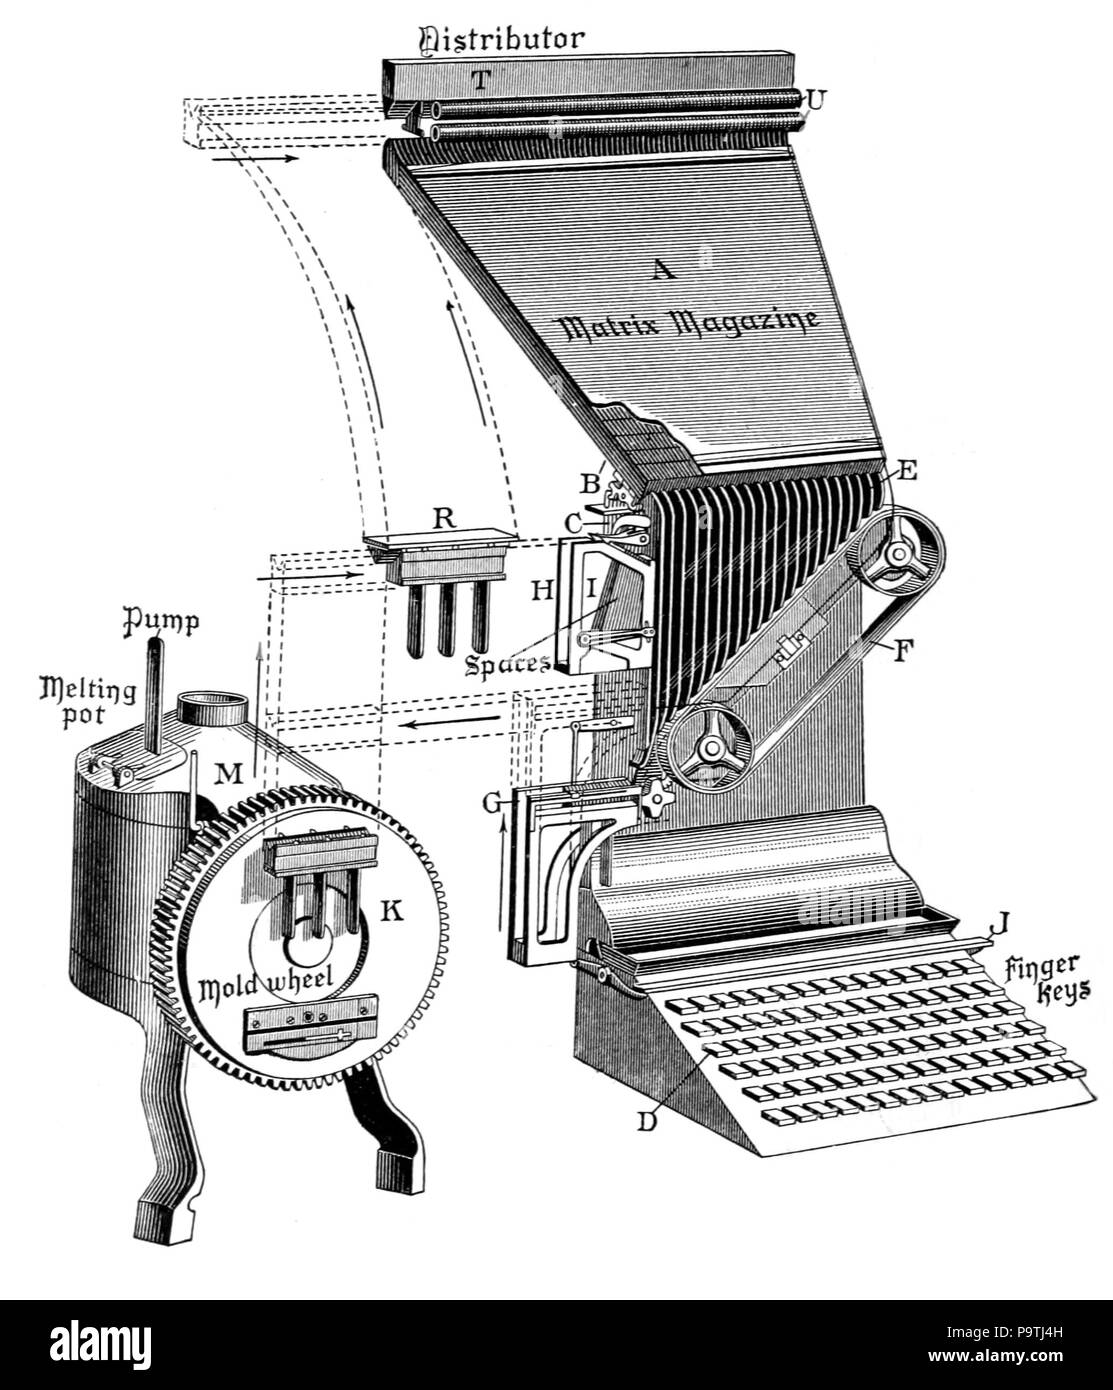 376 De Vinne 1904 - Linotype machine diagram Stock Photo